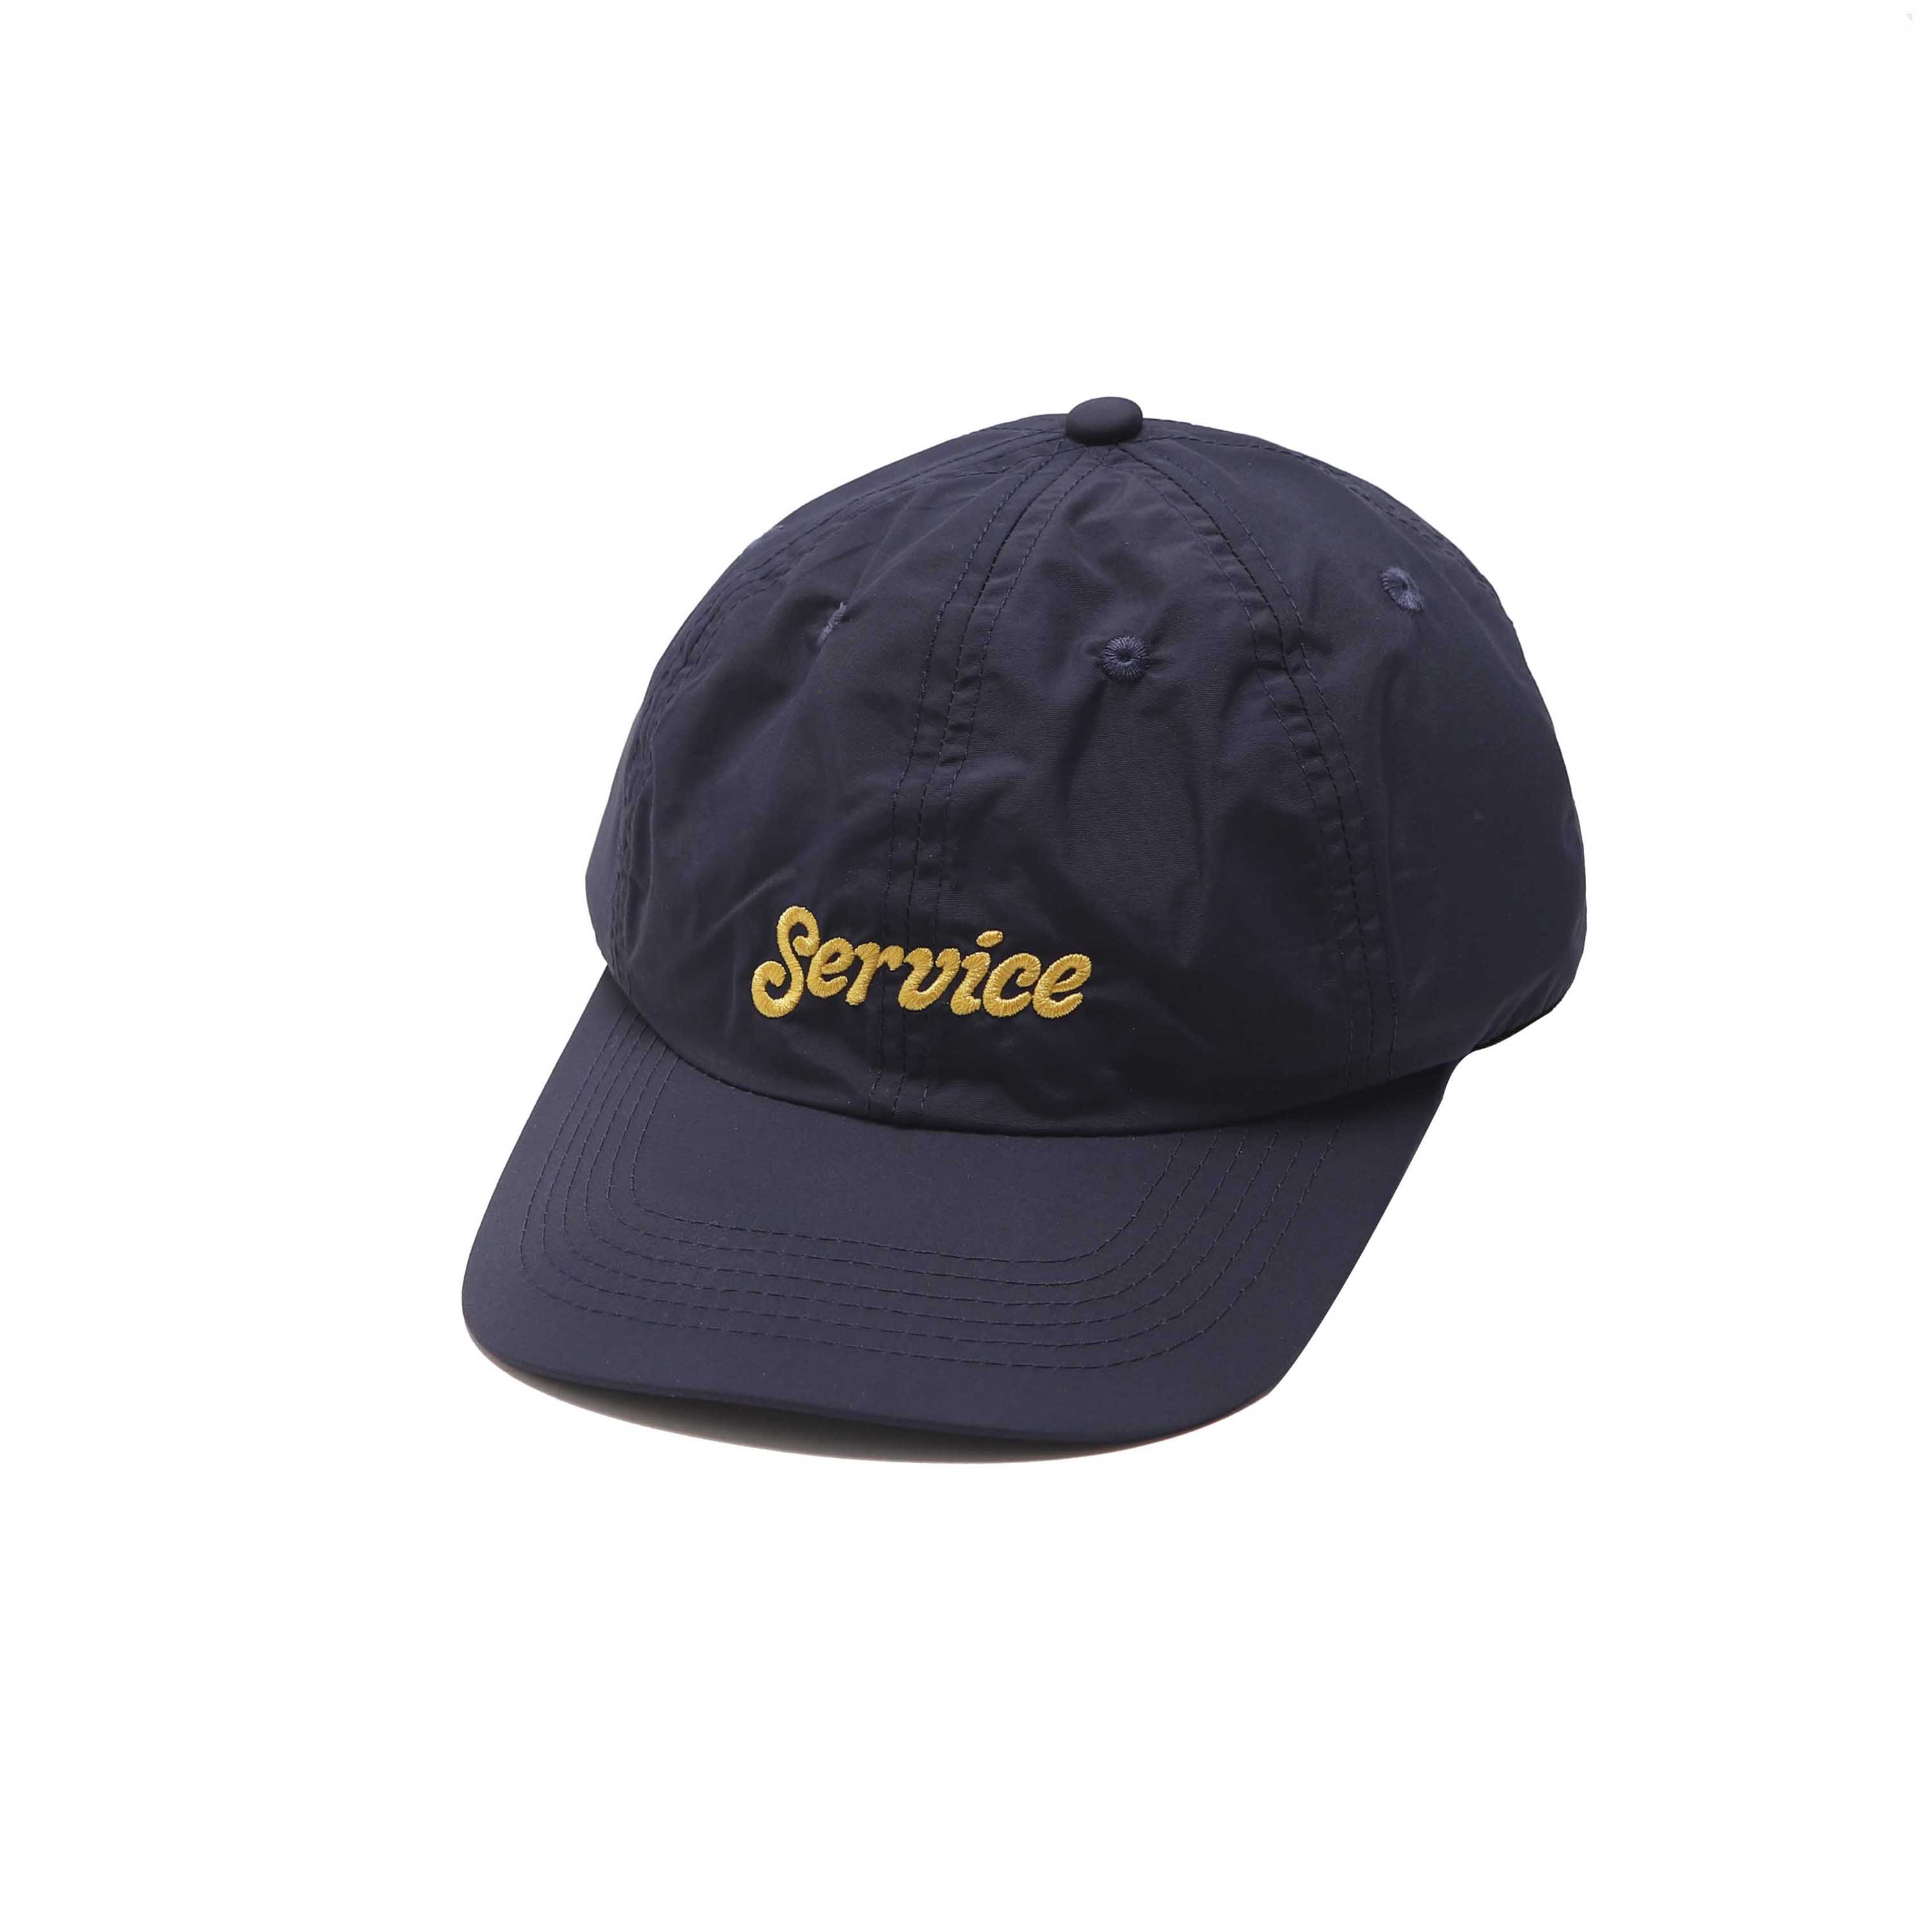 NYLON SERVICE CAP - BLUE